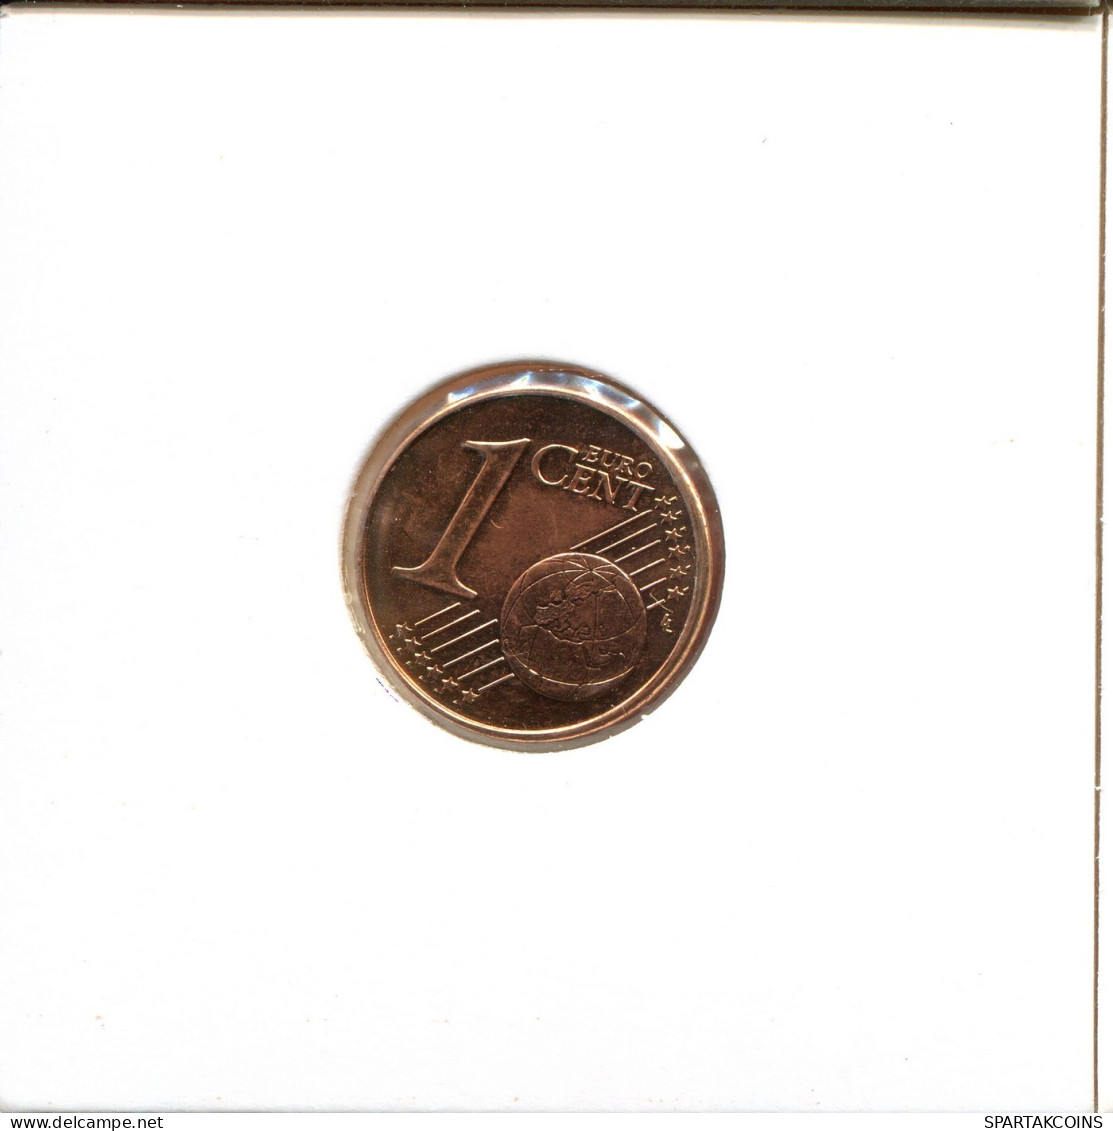 1 EURO CENT 2009 FRANCIA FRANCE Moneda #EU099.E.A - France